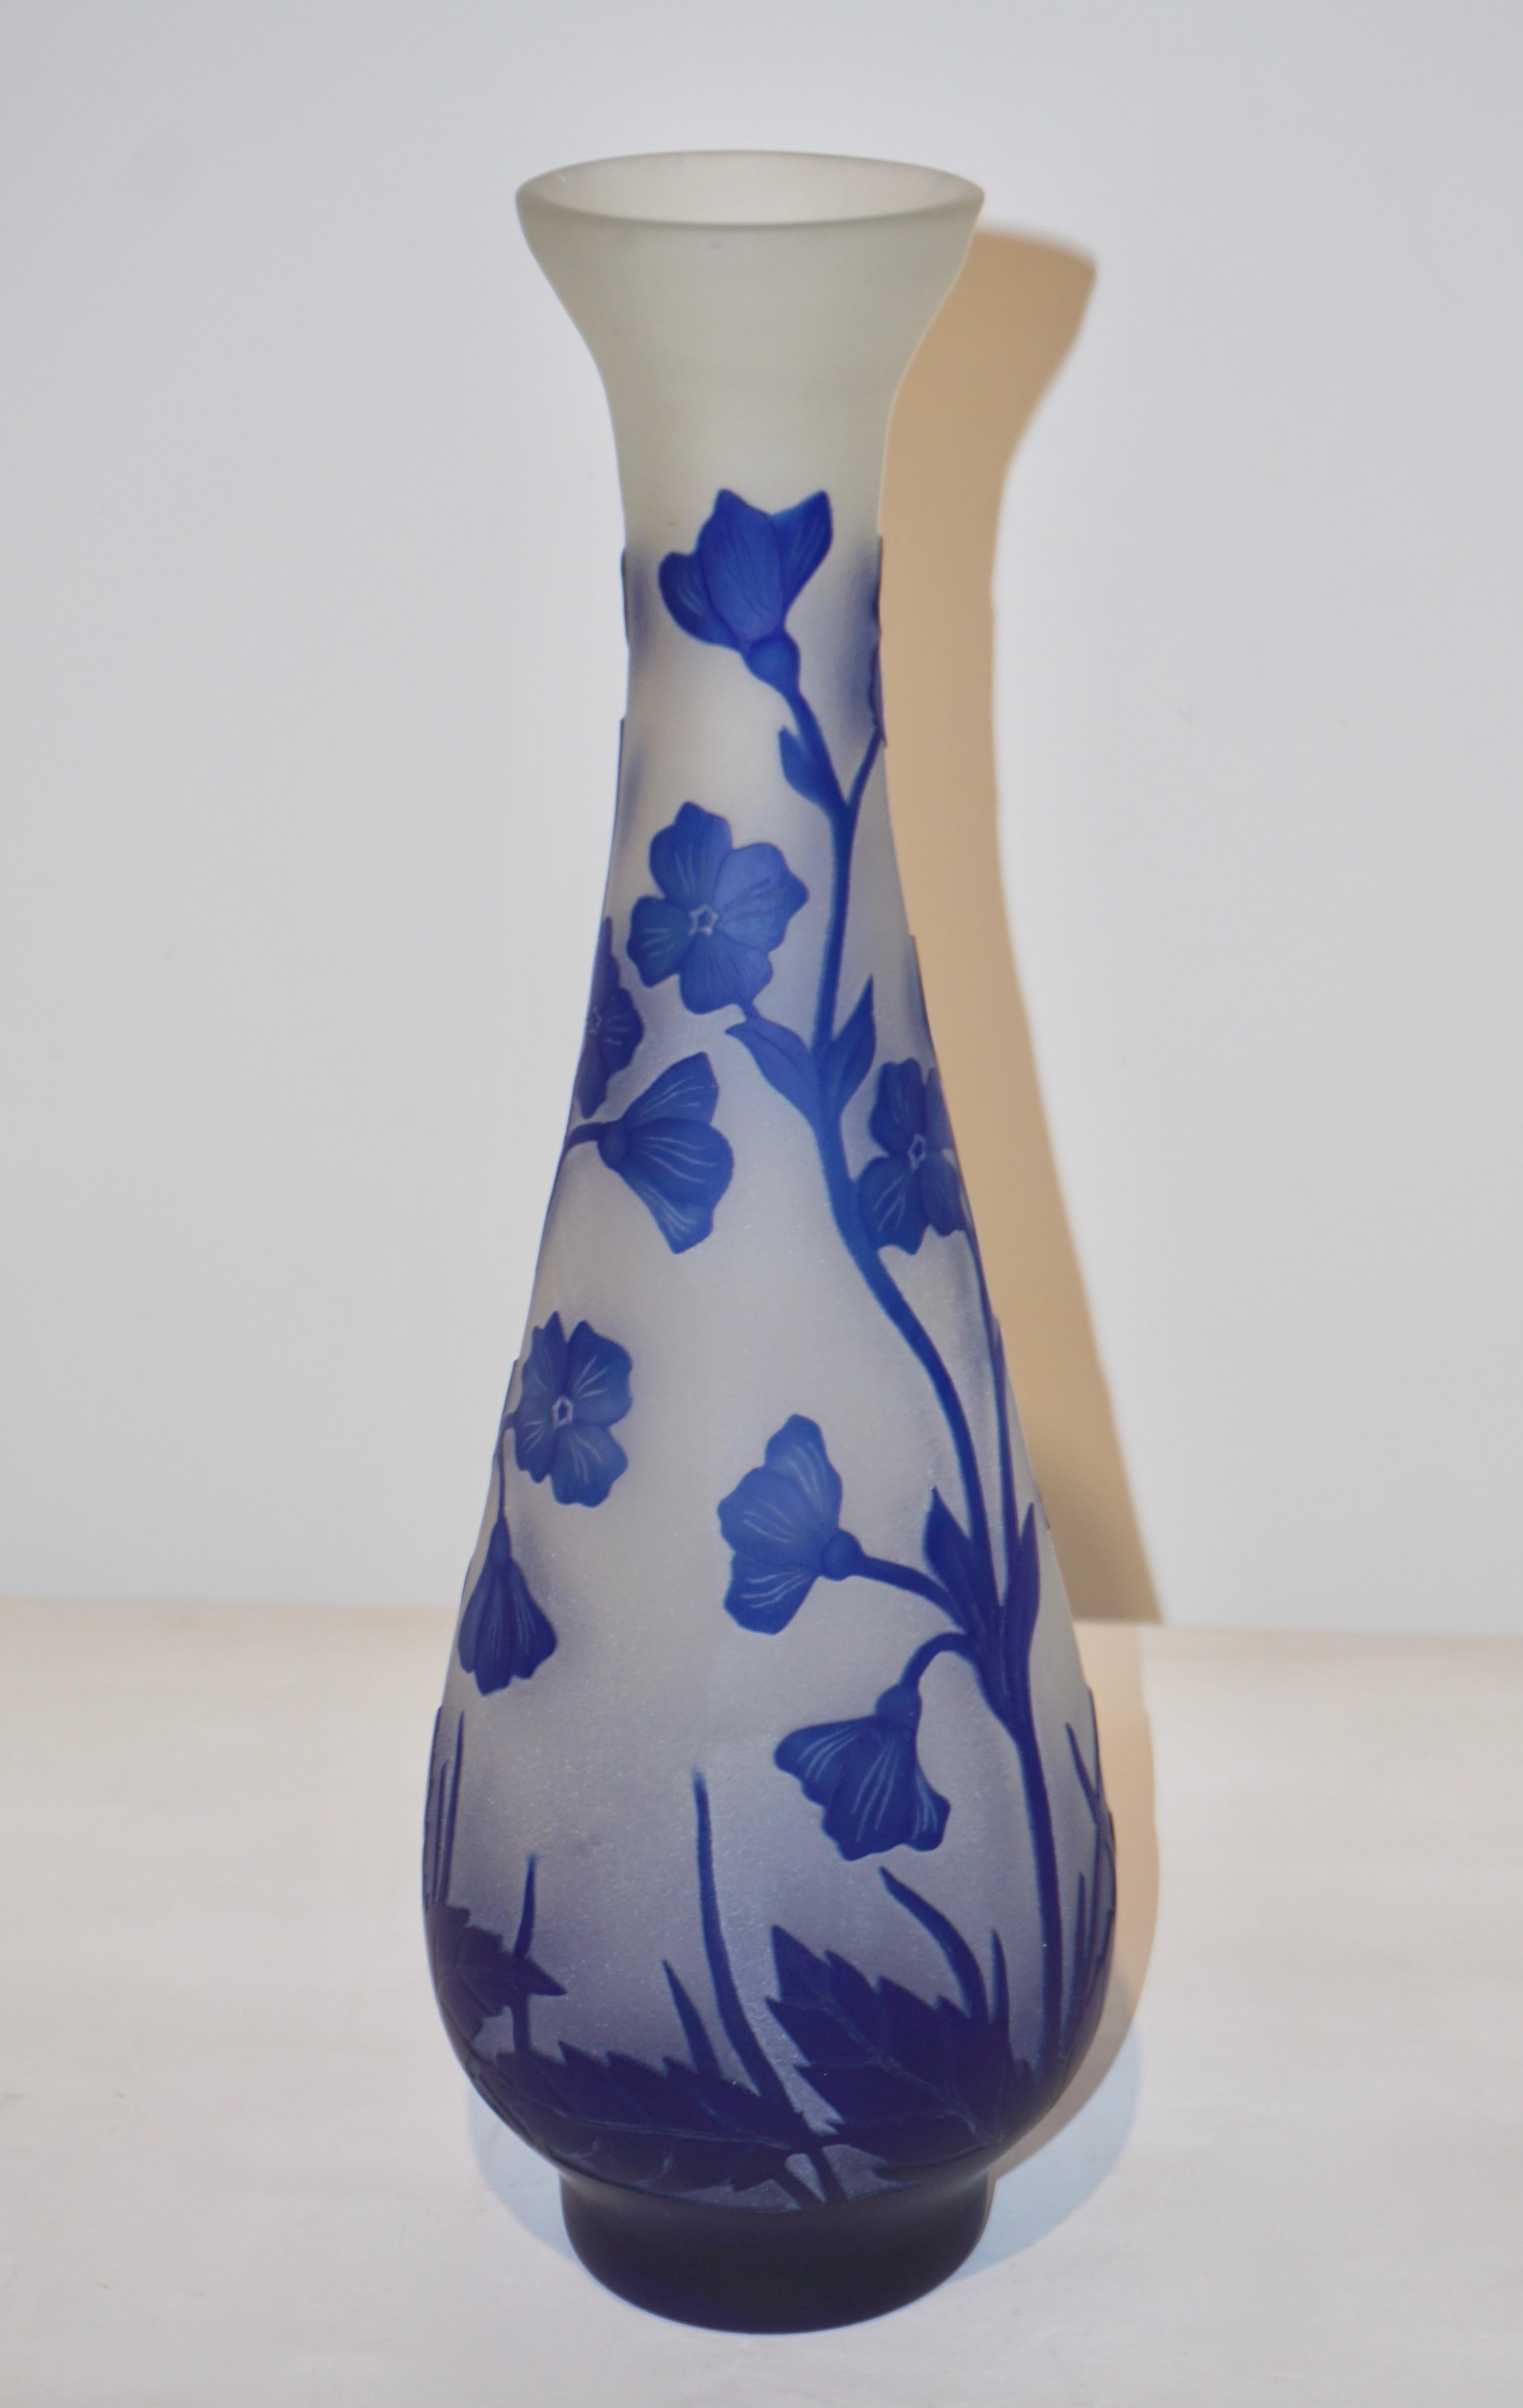 1970s Austrian Art Nouveau Style Crystal Glass Vase with Blue Flax Flowers 3